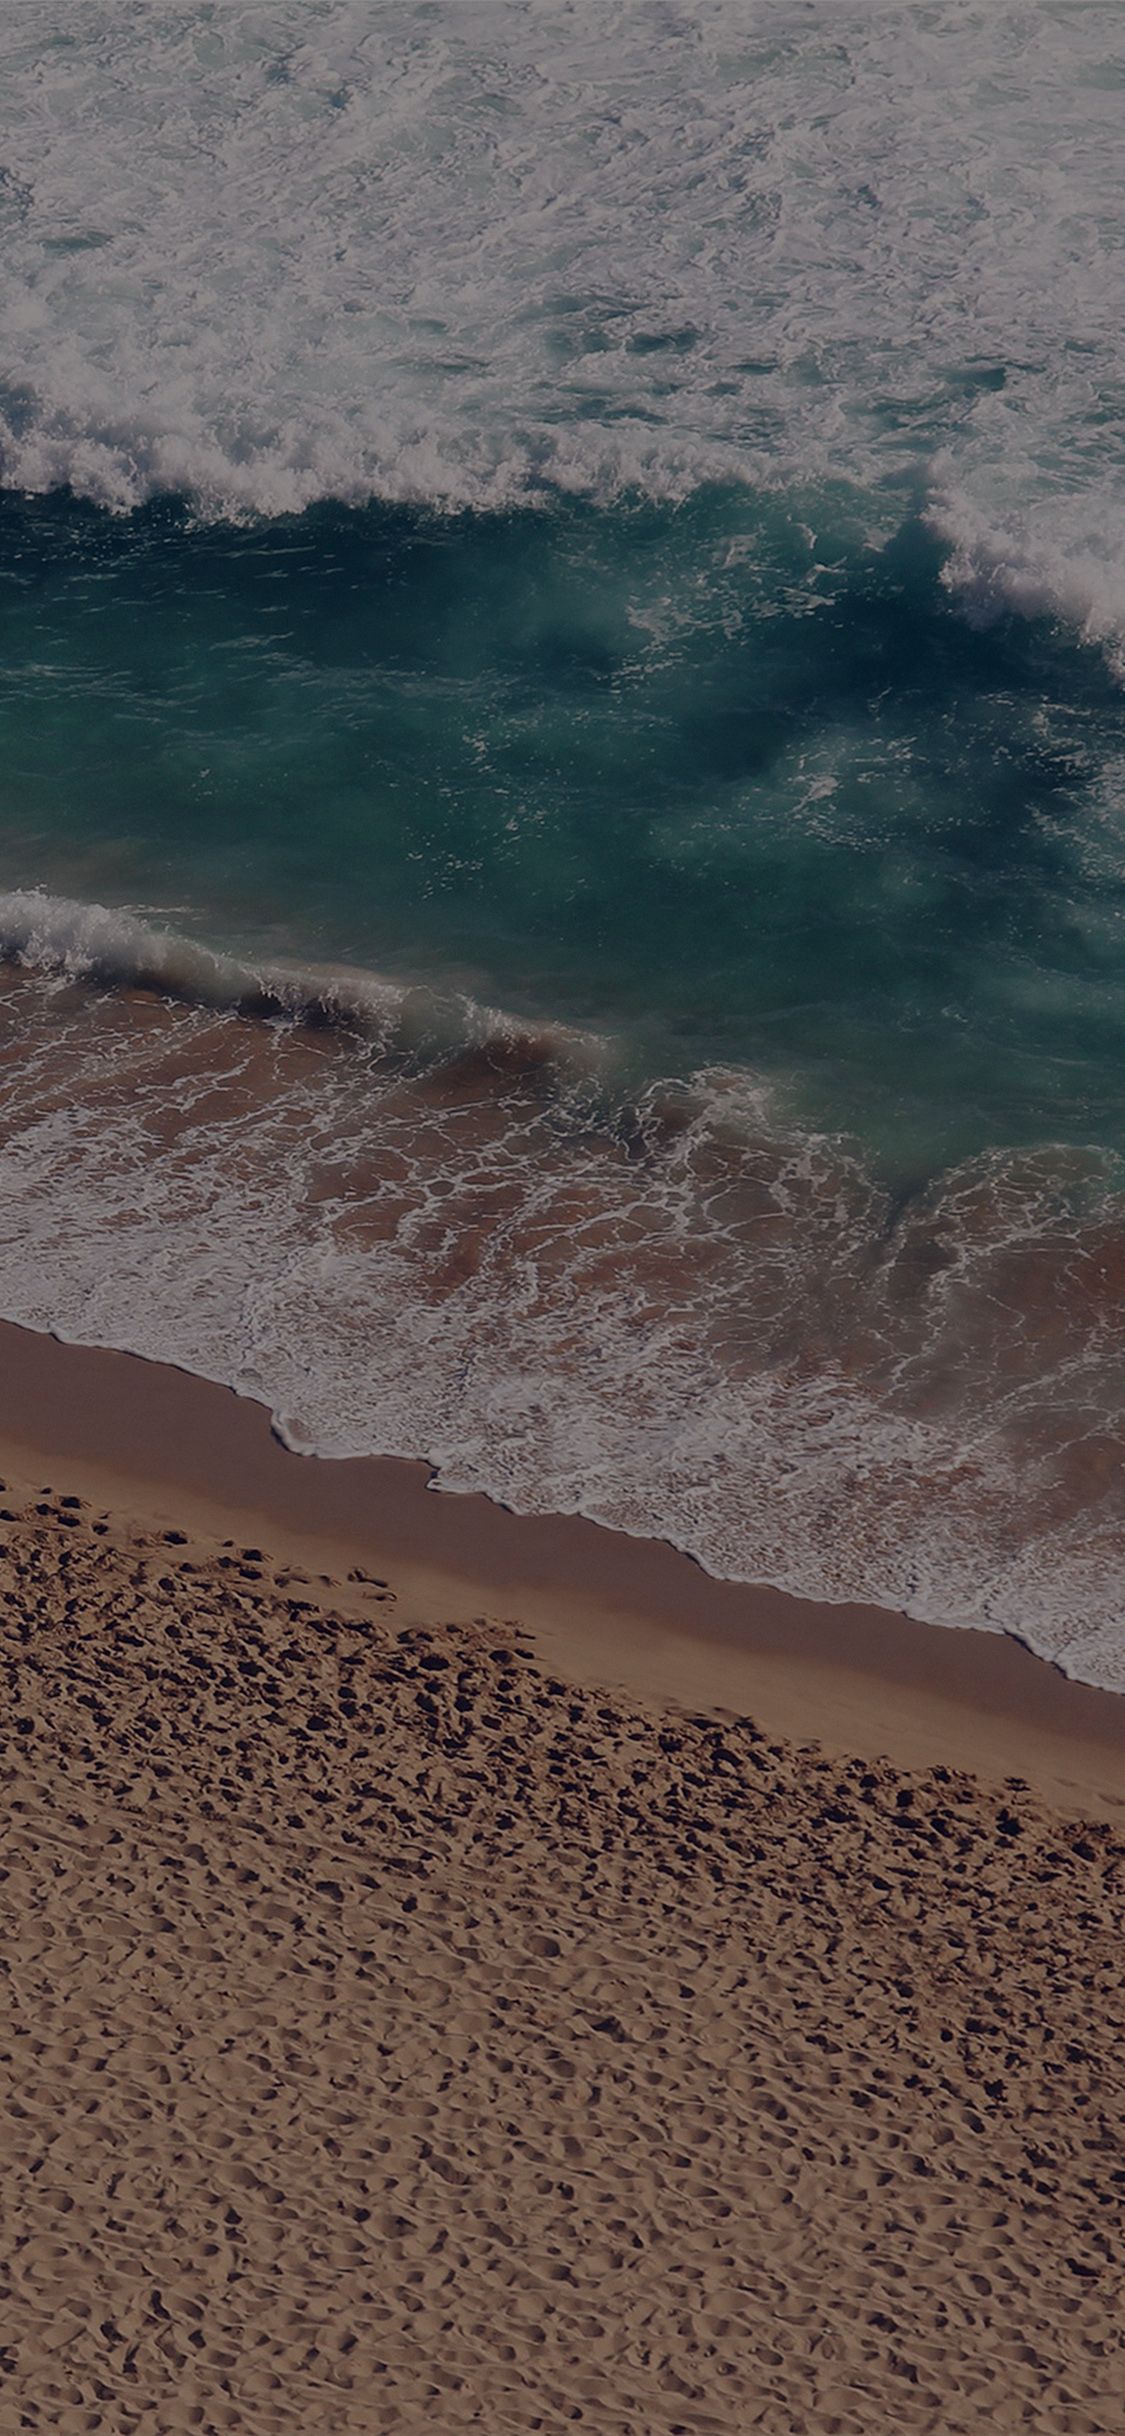 iPhone X wallpaper. beach wave coast nature sea water summer dark